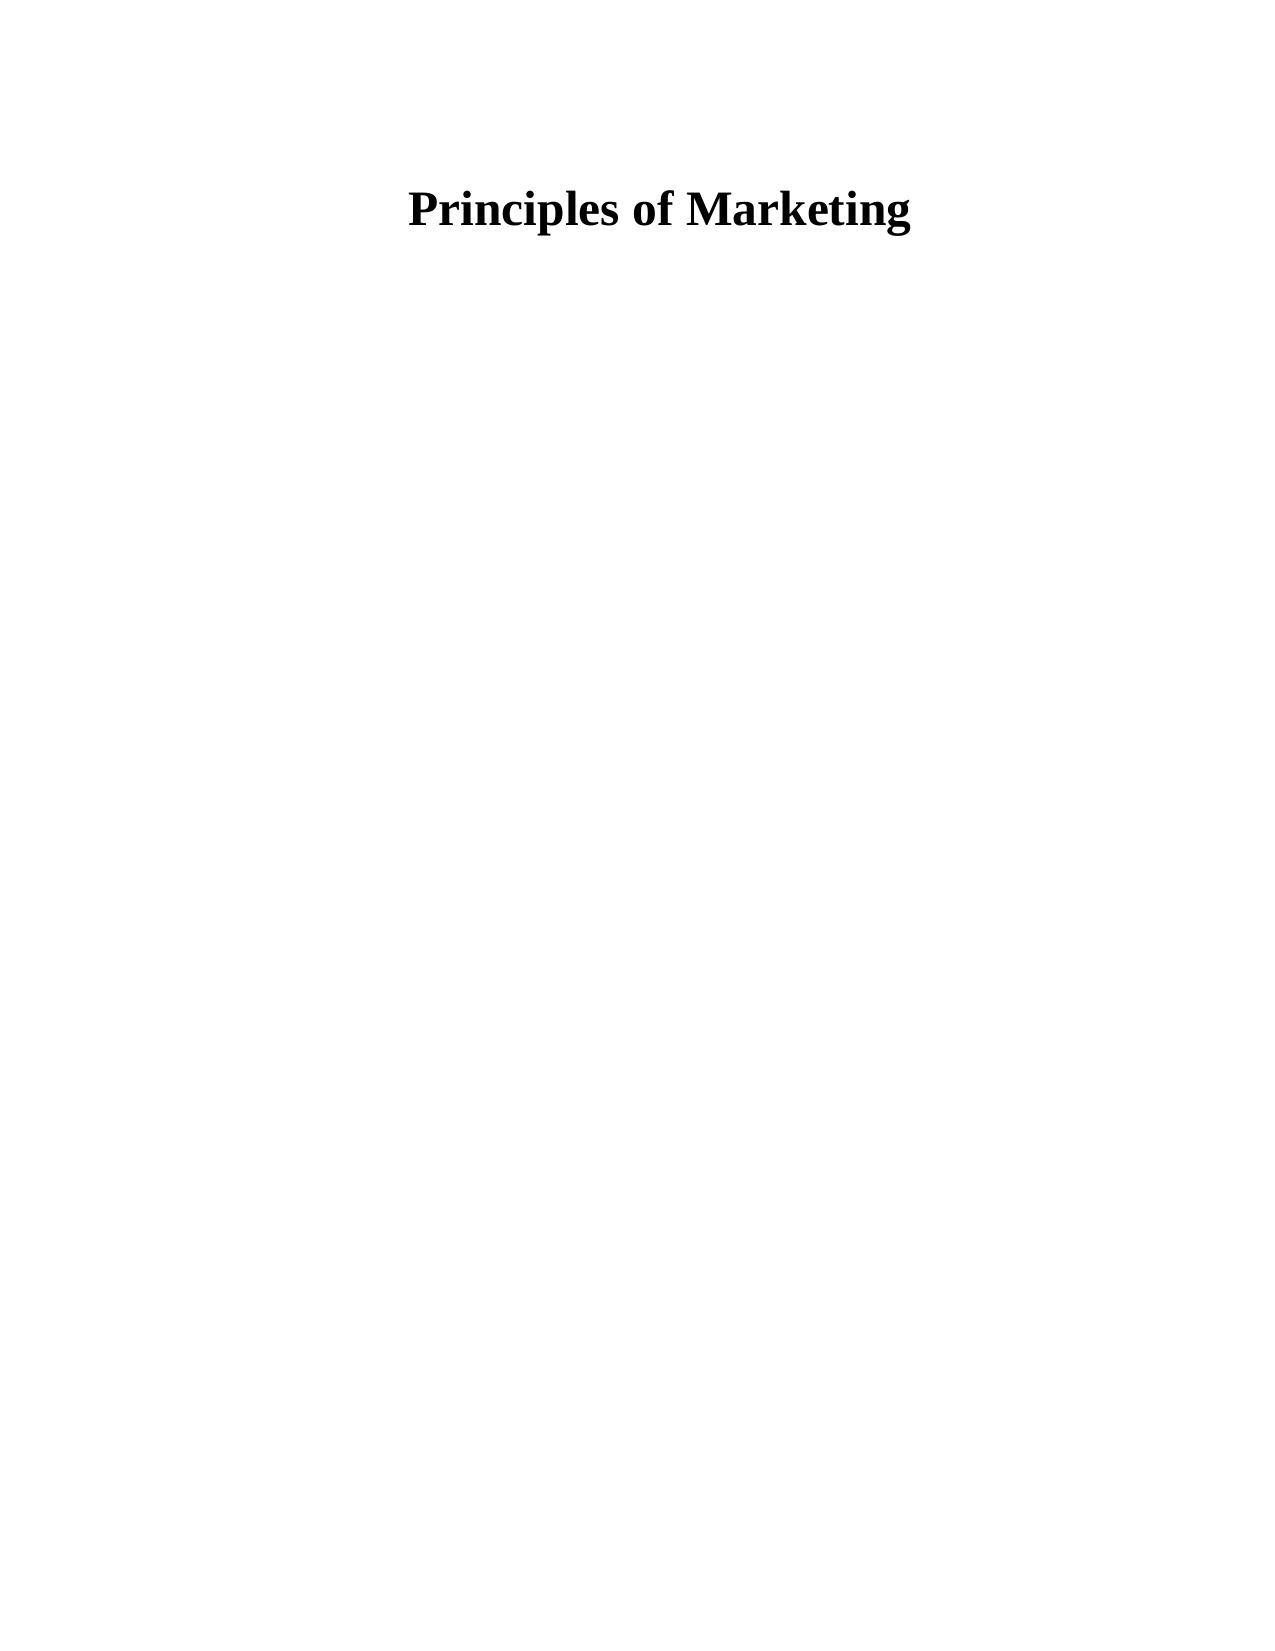 Principles of Marketing \(14th Edition\) - PDFDrive.com